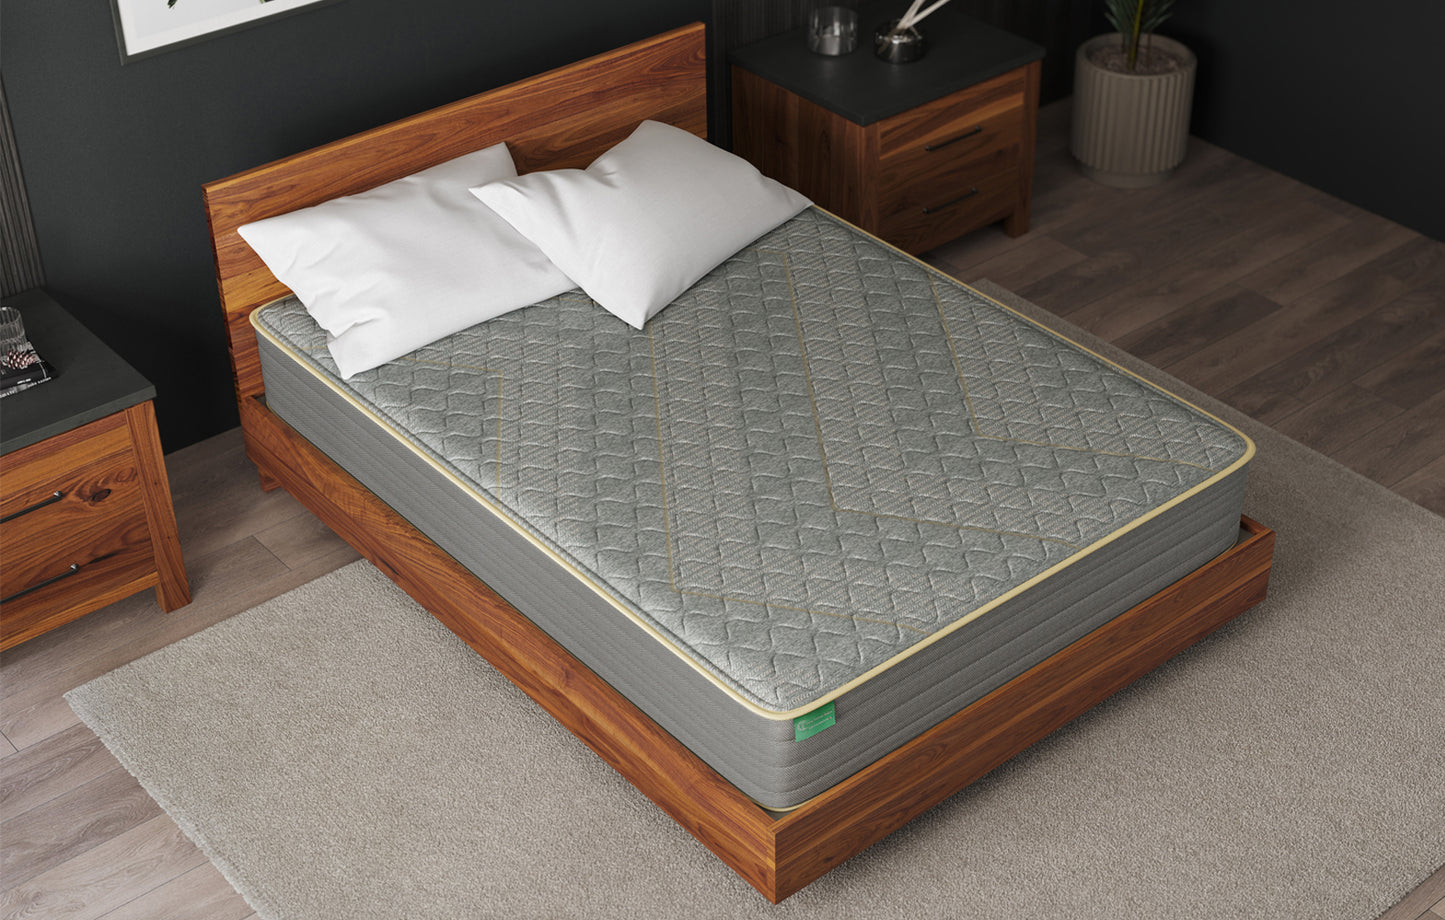 Cocoa Firm, custom mattress